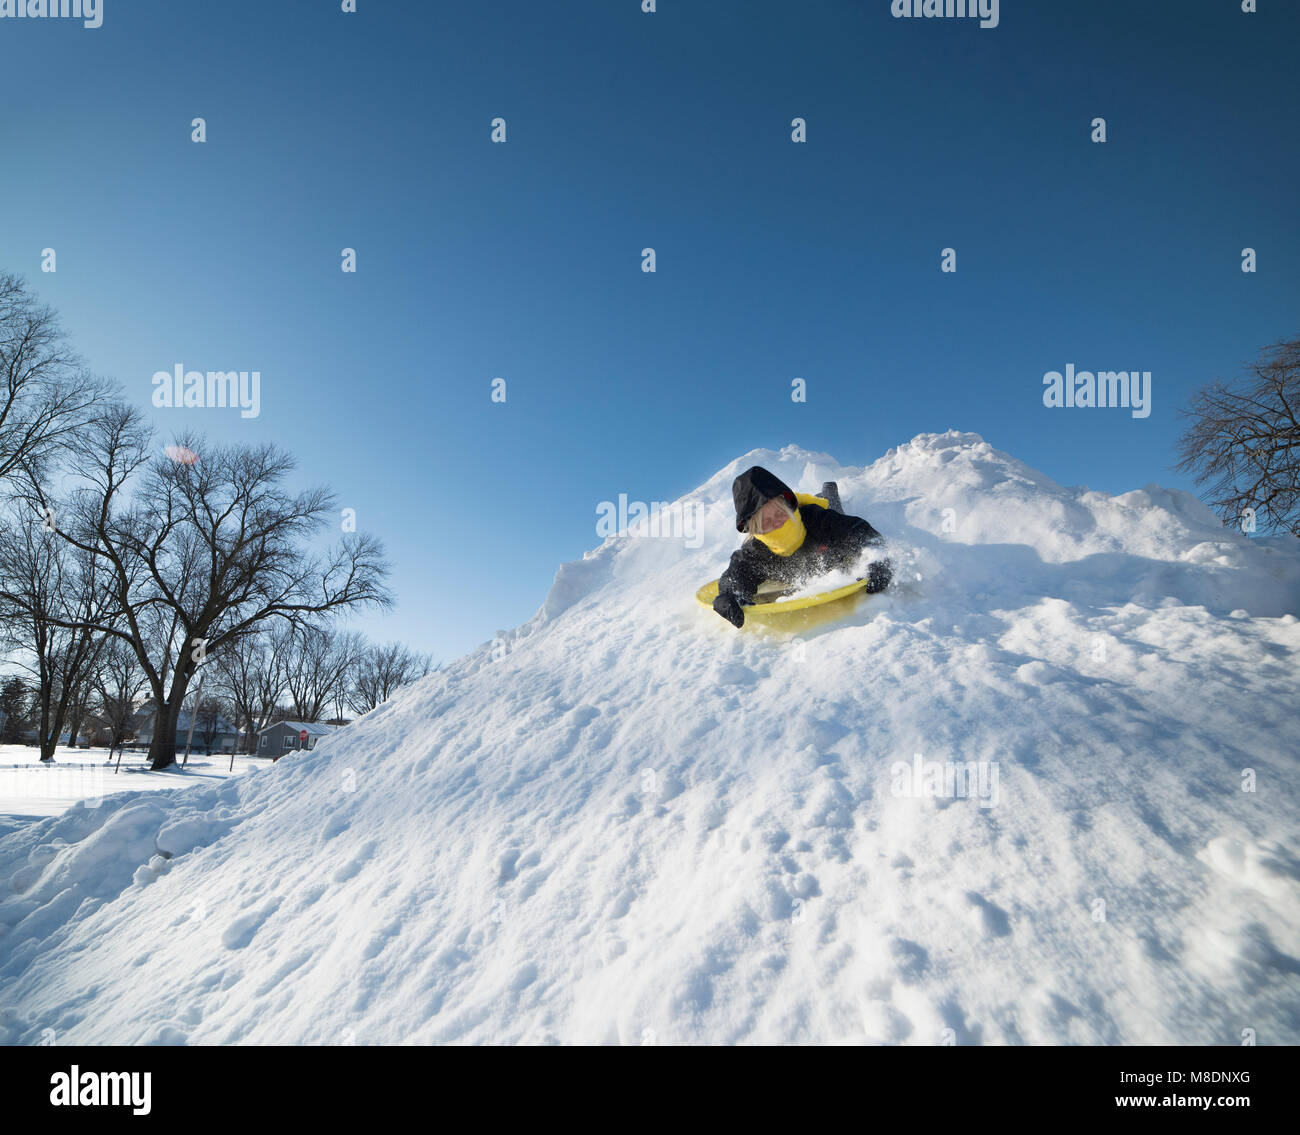 Boy sledding on snow Stock Photo